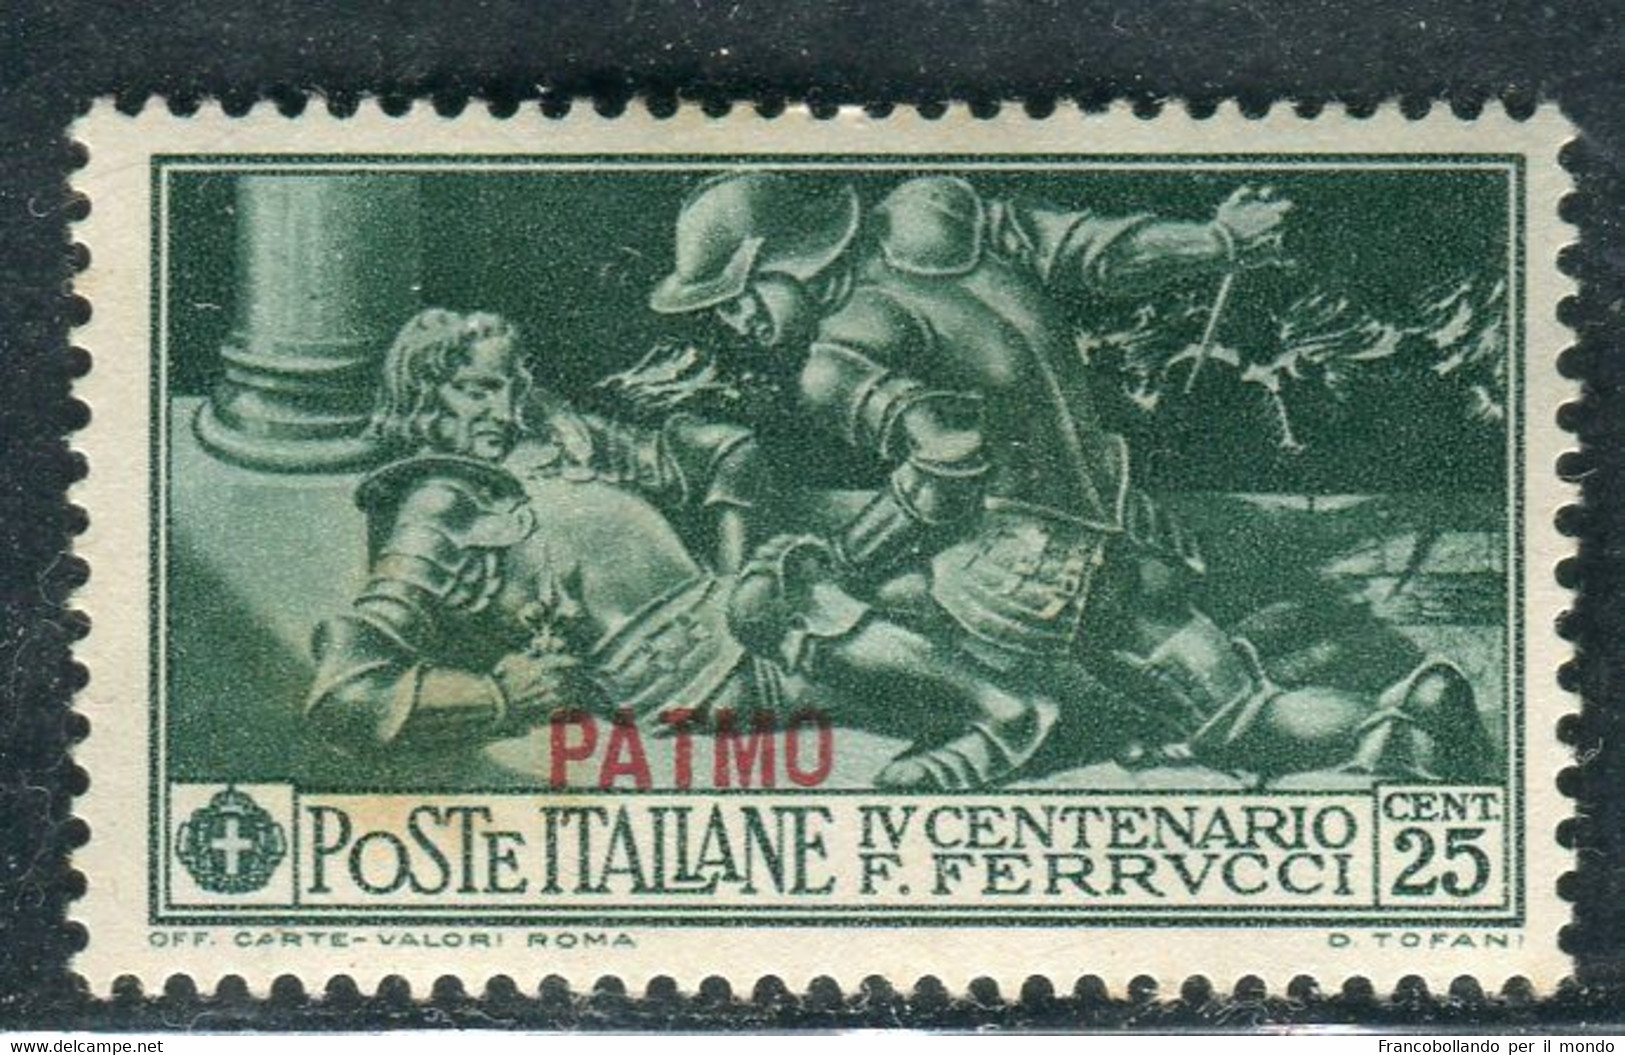 1930 Egeo Isole Patmo 25 Cent Serie Ferrucci MH Sassone 13 - Egée (Patmo)